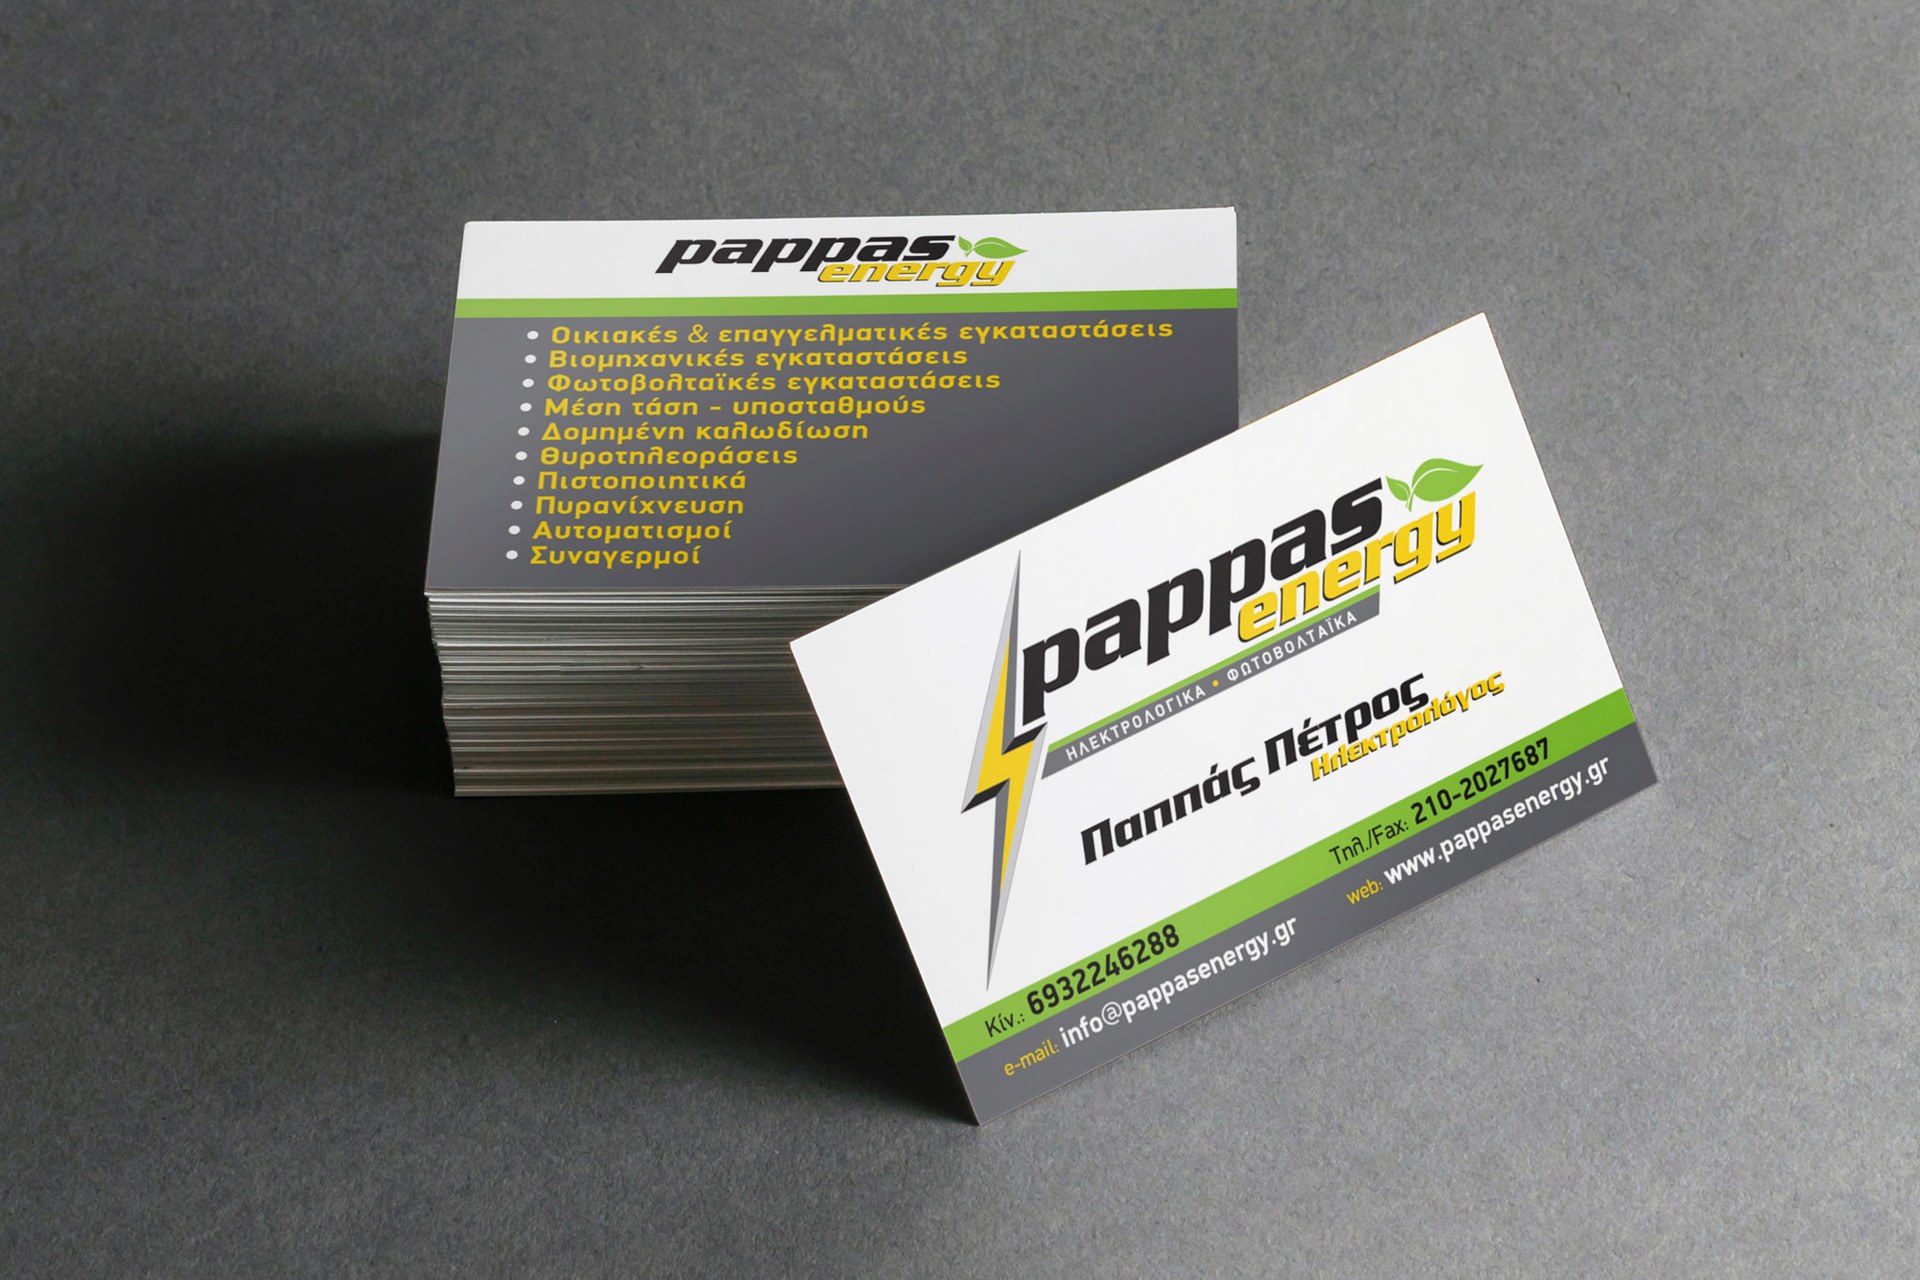 Pappas energy business cards design